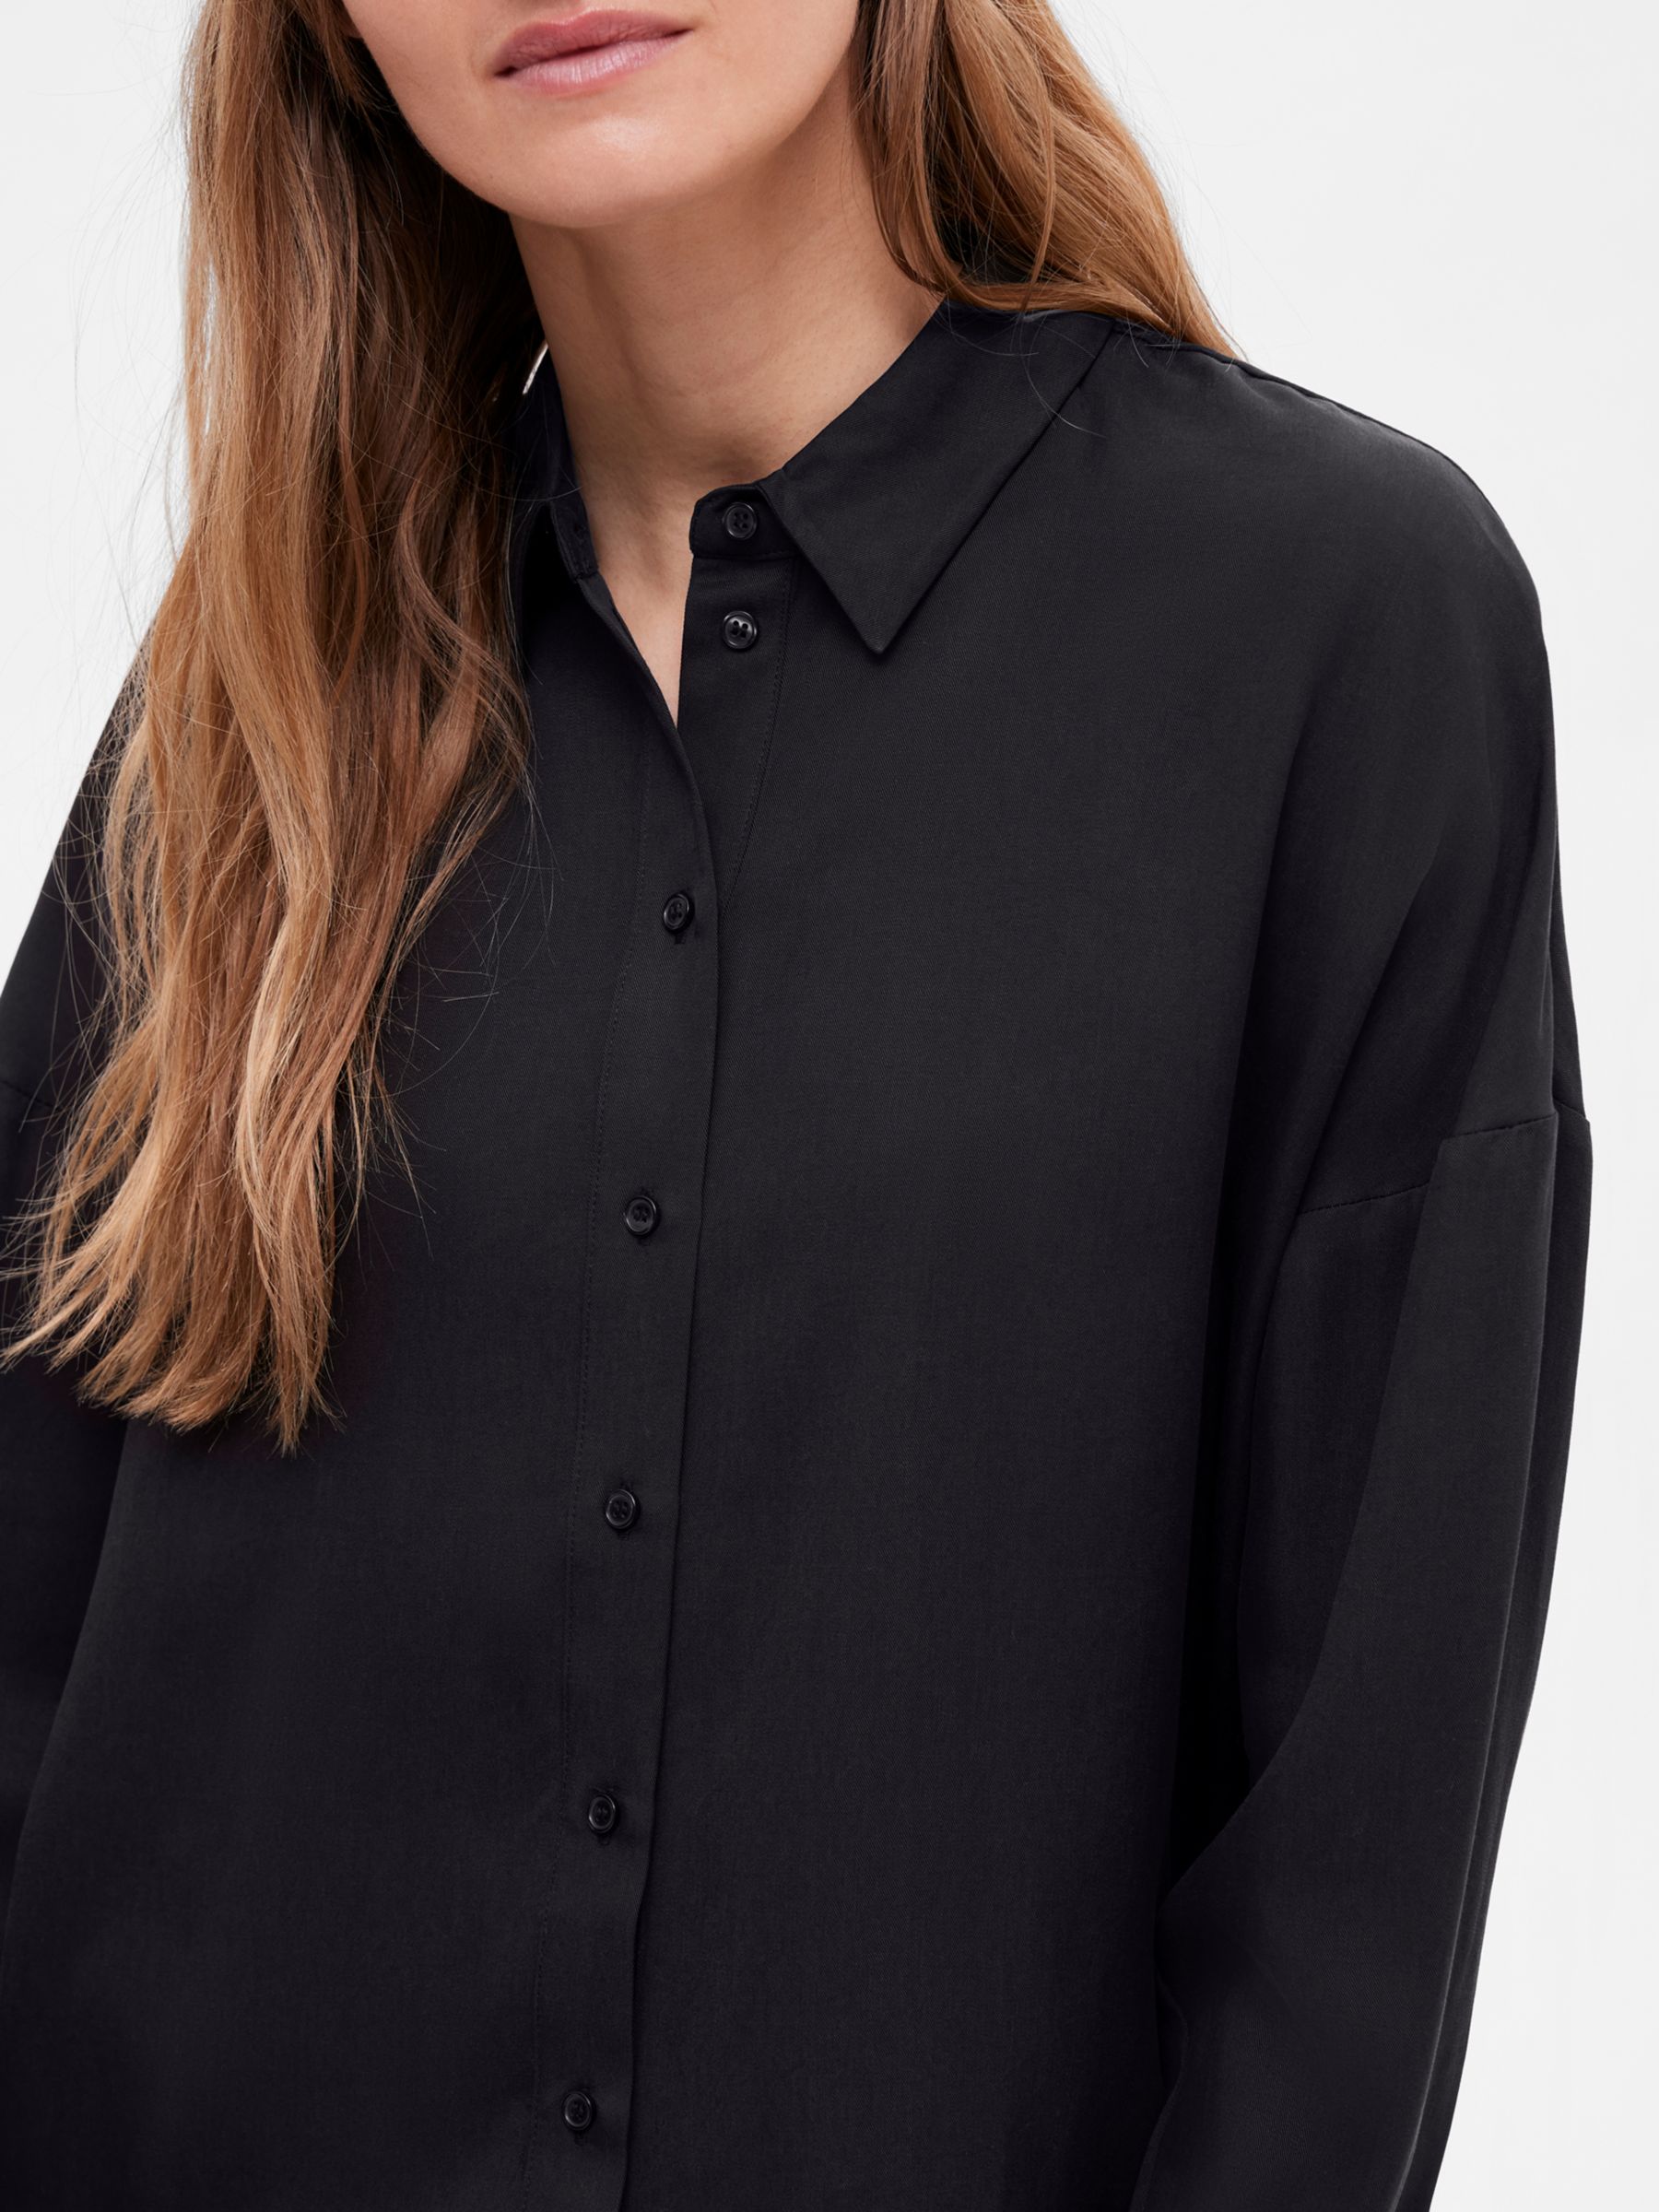 Buy SELECTED FEMME Long Sleeve Shirt Online at johnlewis.com